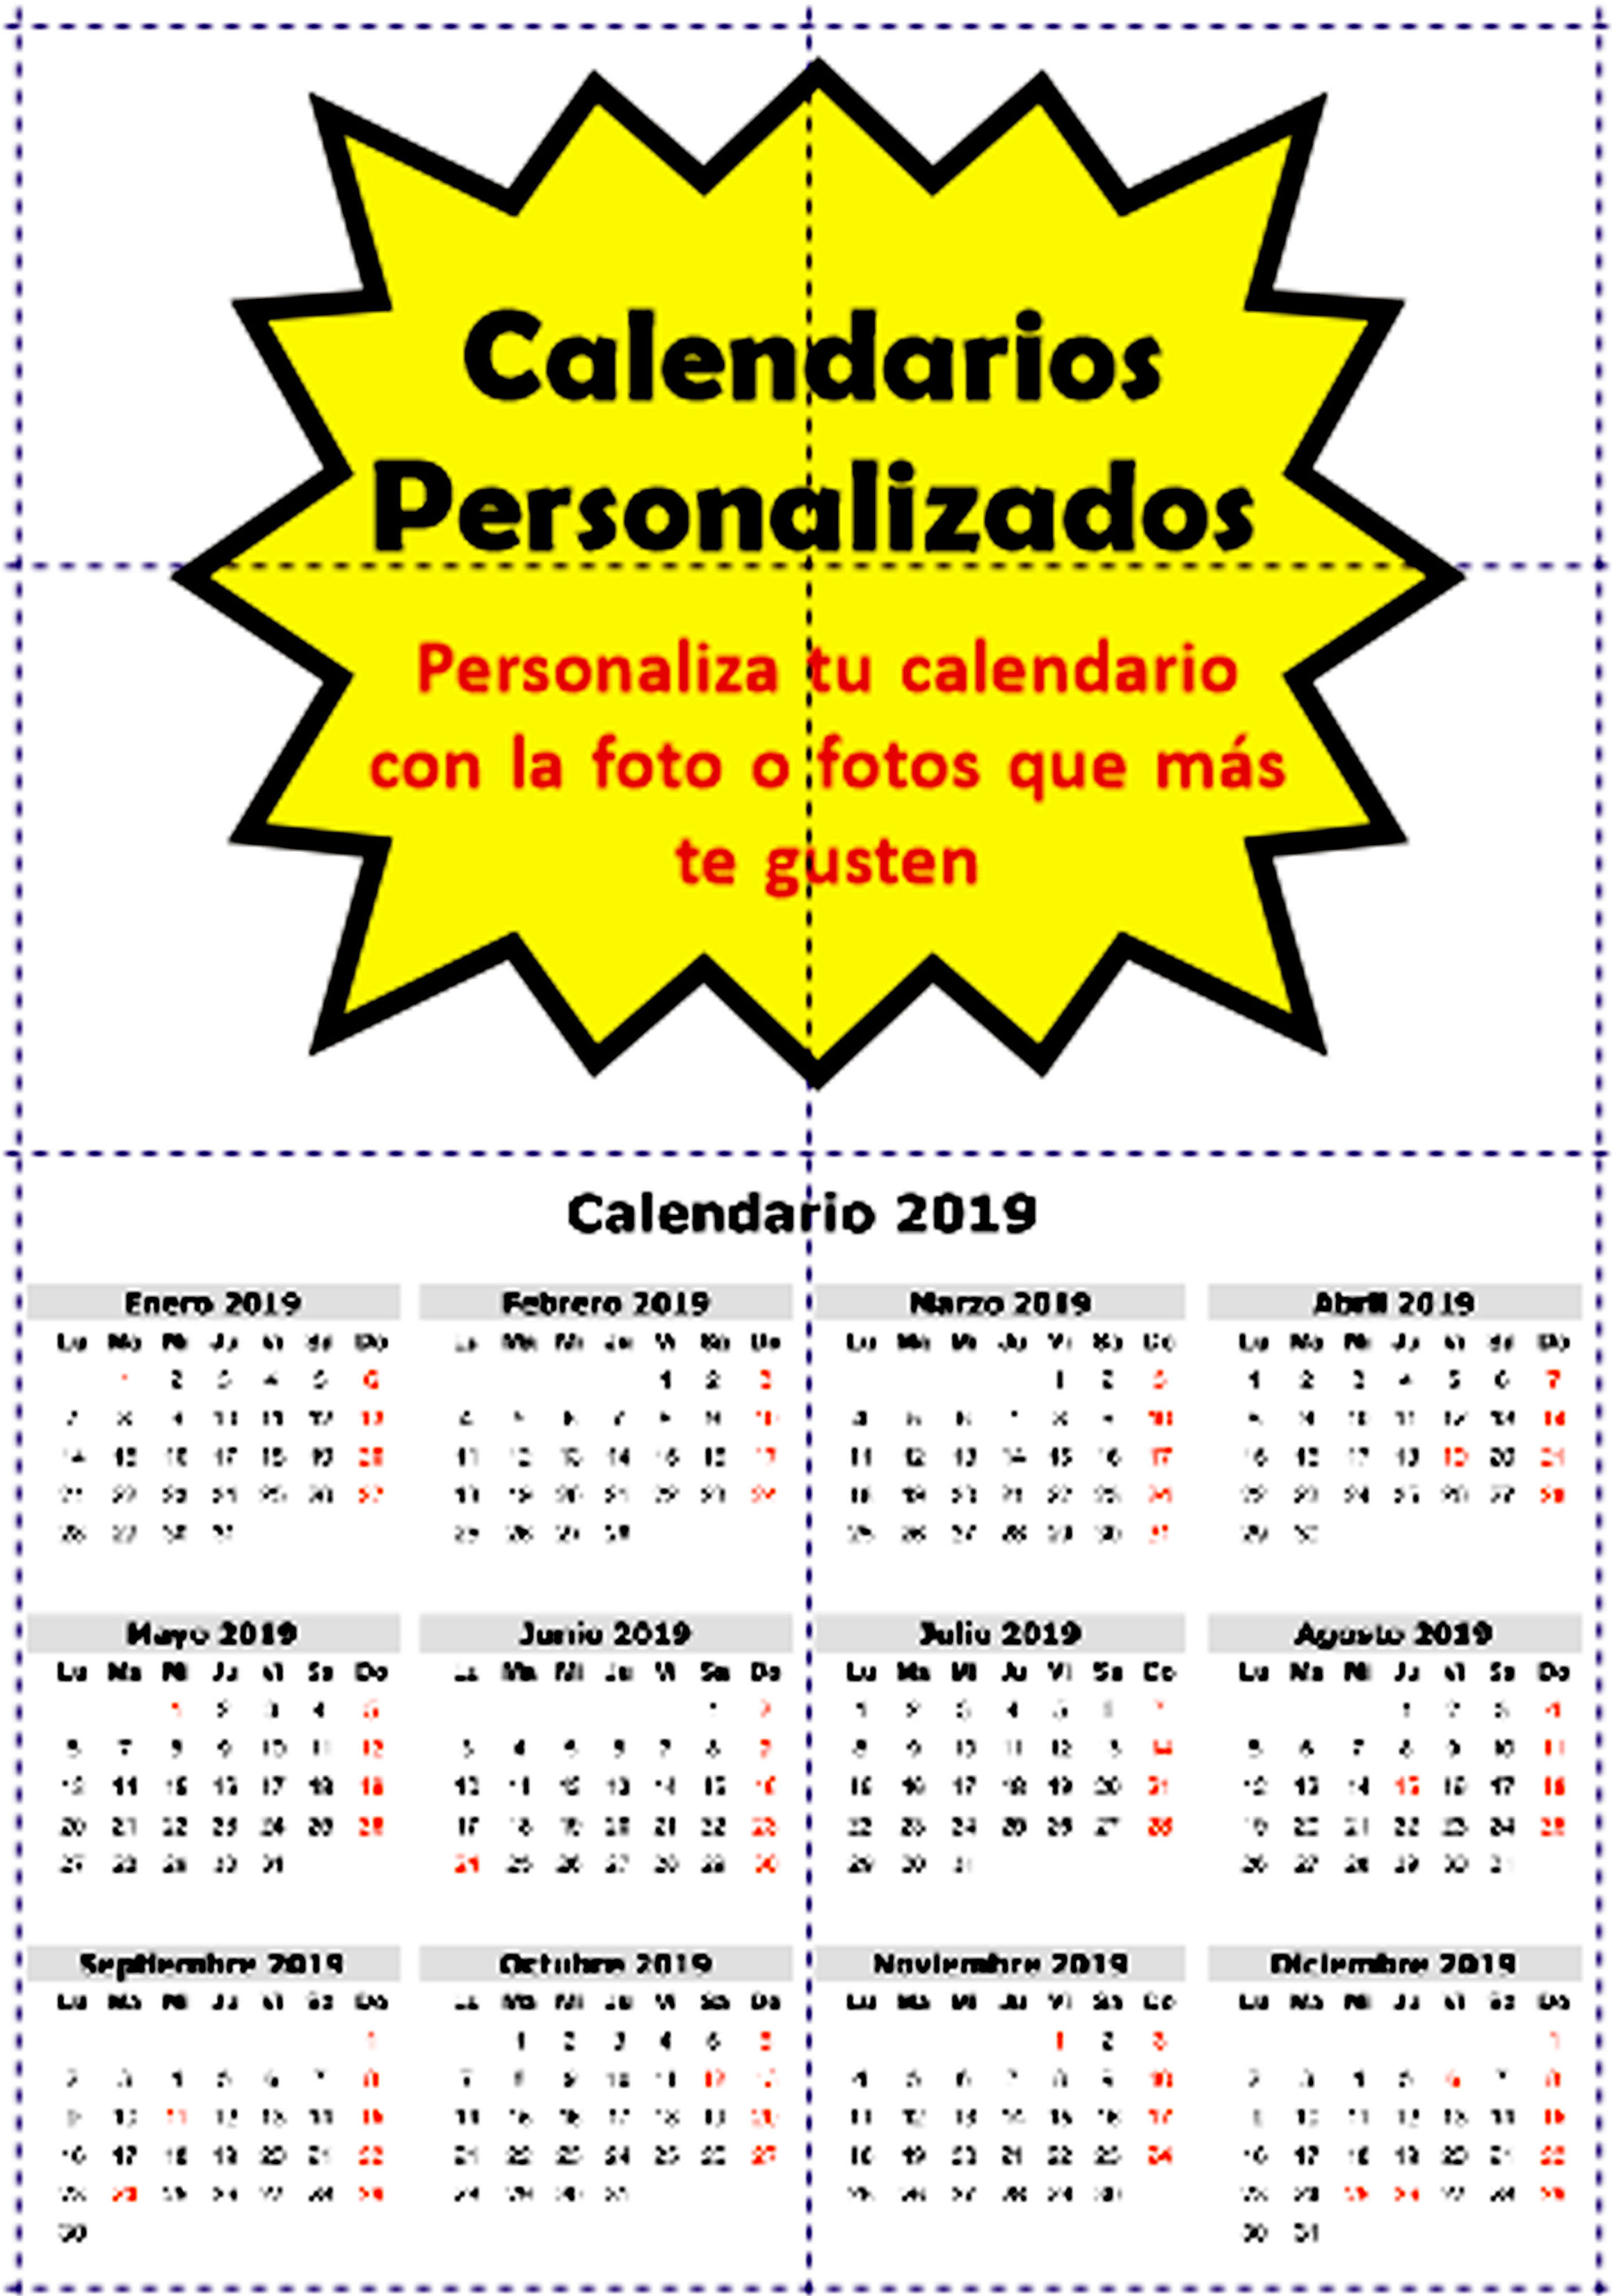 Calendarios Personalizados